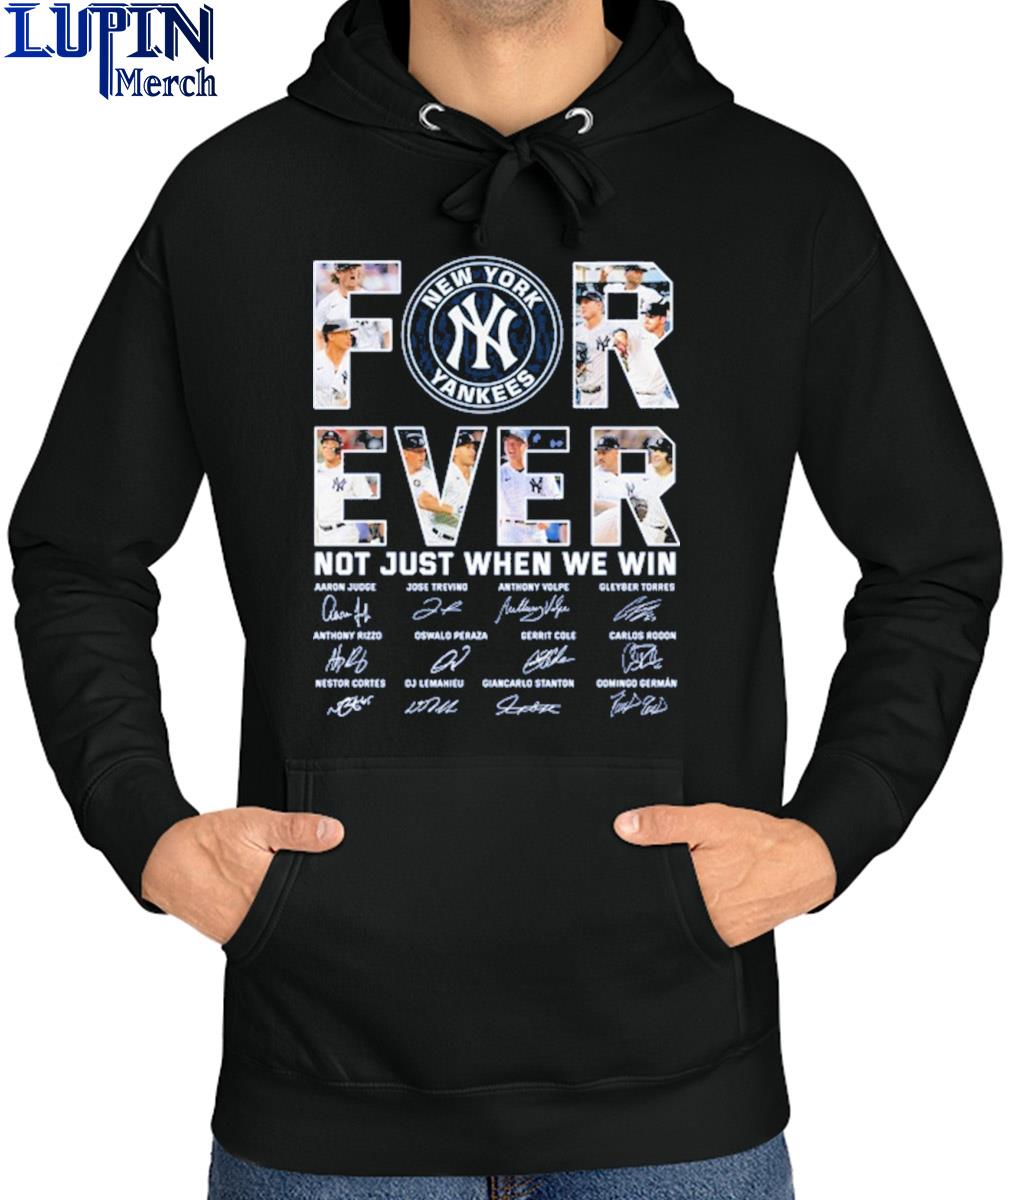 Gerrit Cole New York baseball signature shirt, hoodie, sweater and long  sleeve